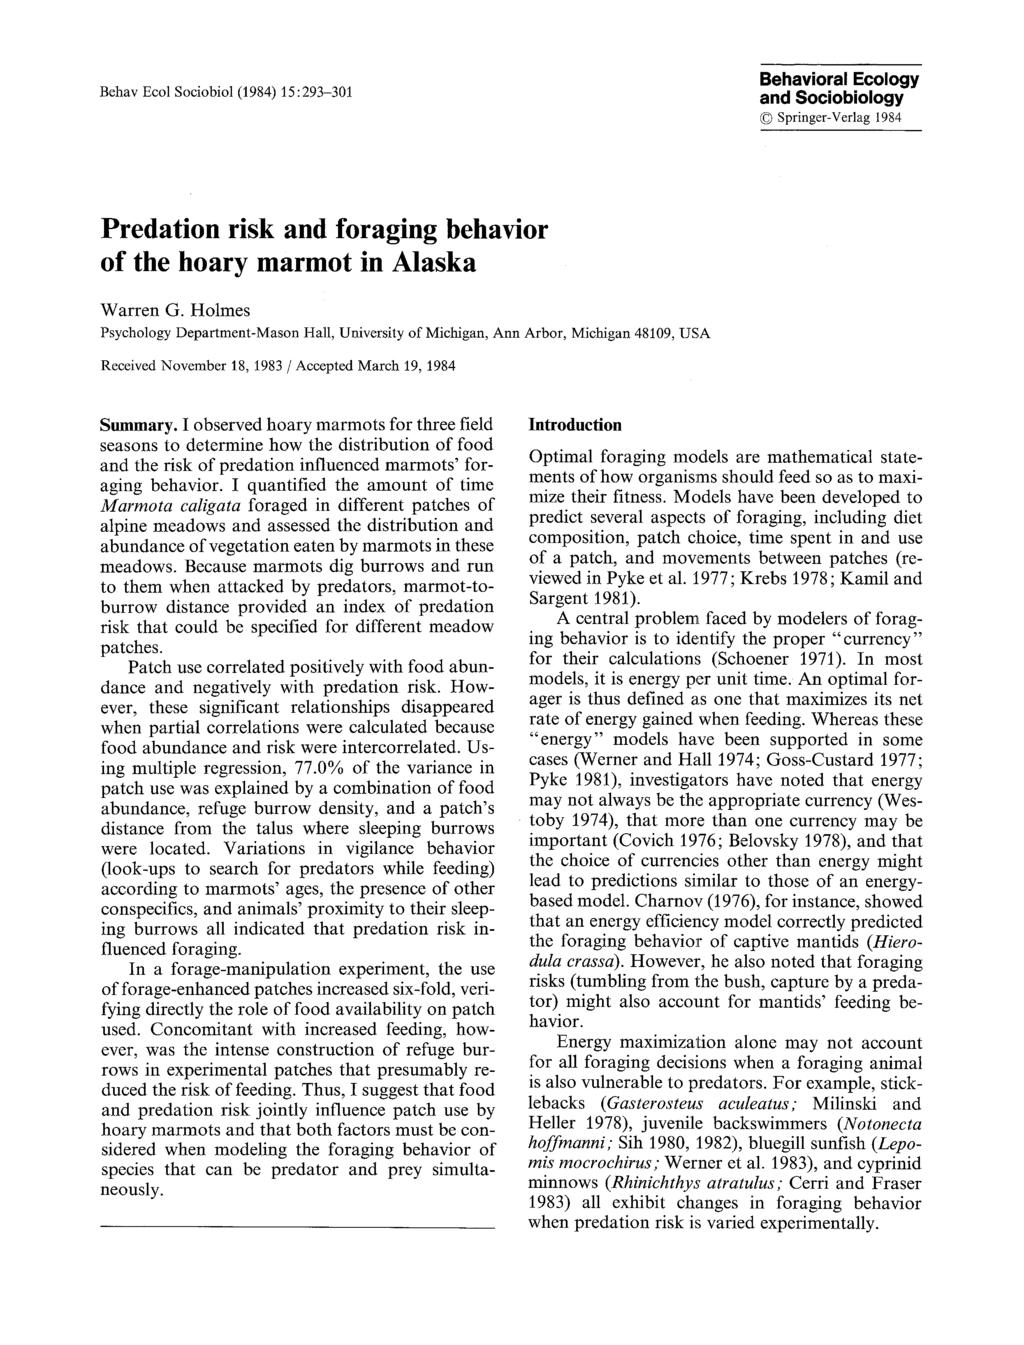 Behav Ecol Sociobiol (1984) 15:293-301 Behavioral Ecology and Sociobiology 9 Springer-Verlag 1984 Predation risk and foraging behavior of the hoary marmot in Alaska Warren G.